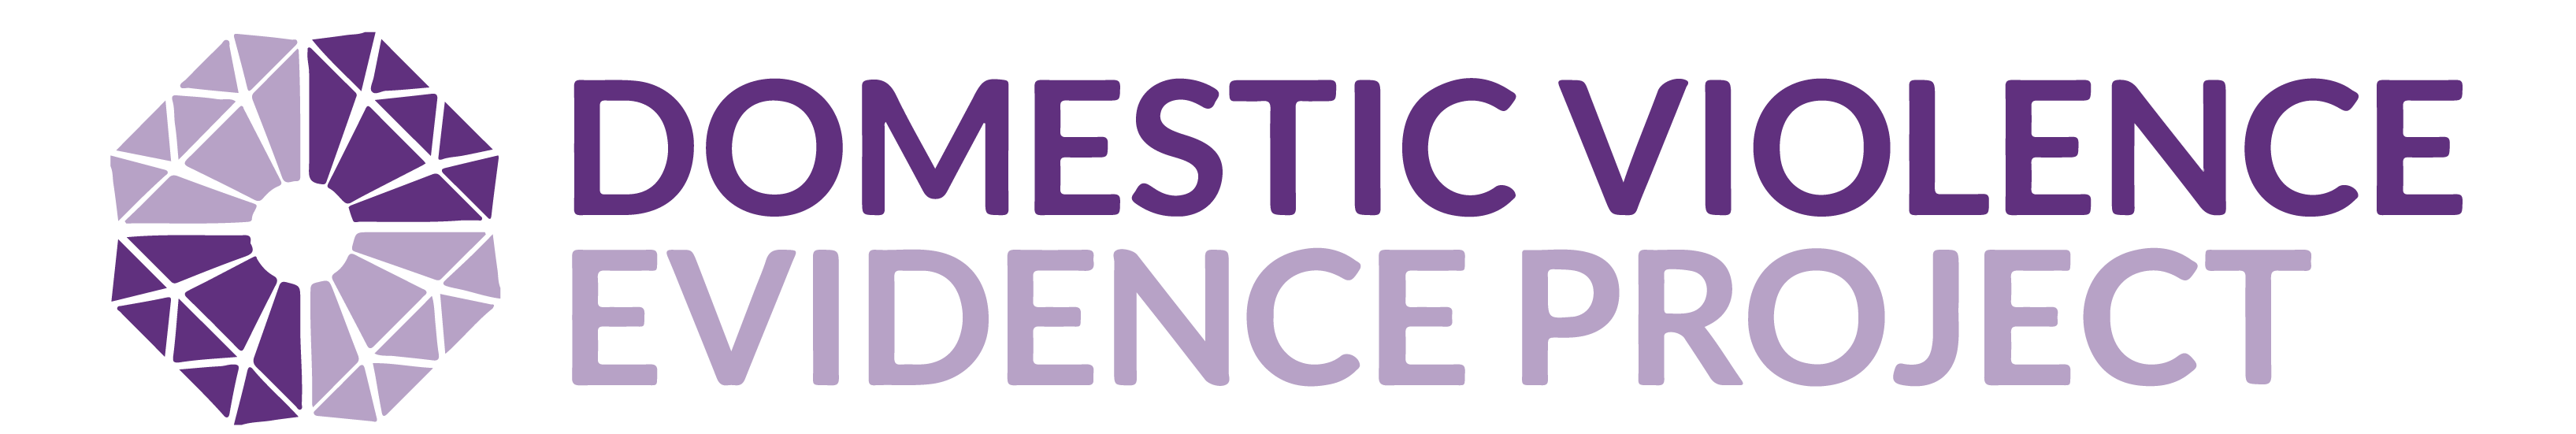 Domestic Violence Evidence Project logo